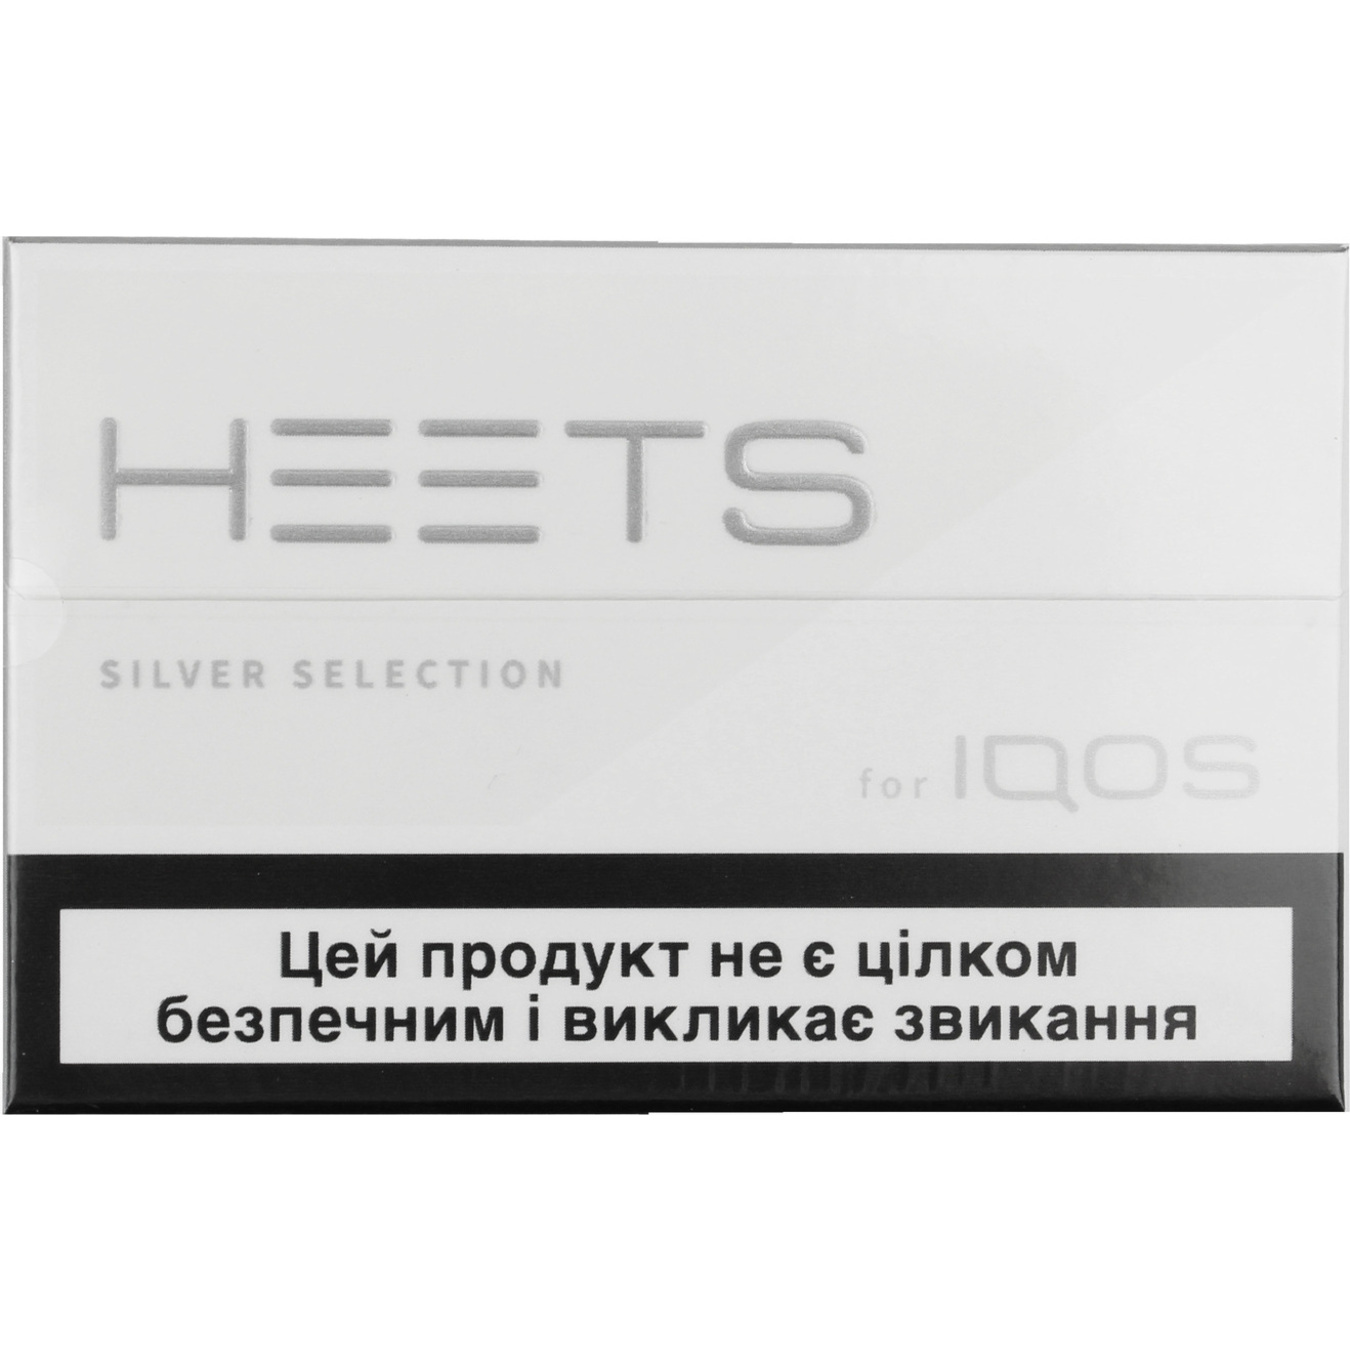 Стіки Heets Silver Selection 20шт (ціна вказана без акцизу)